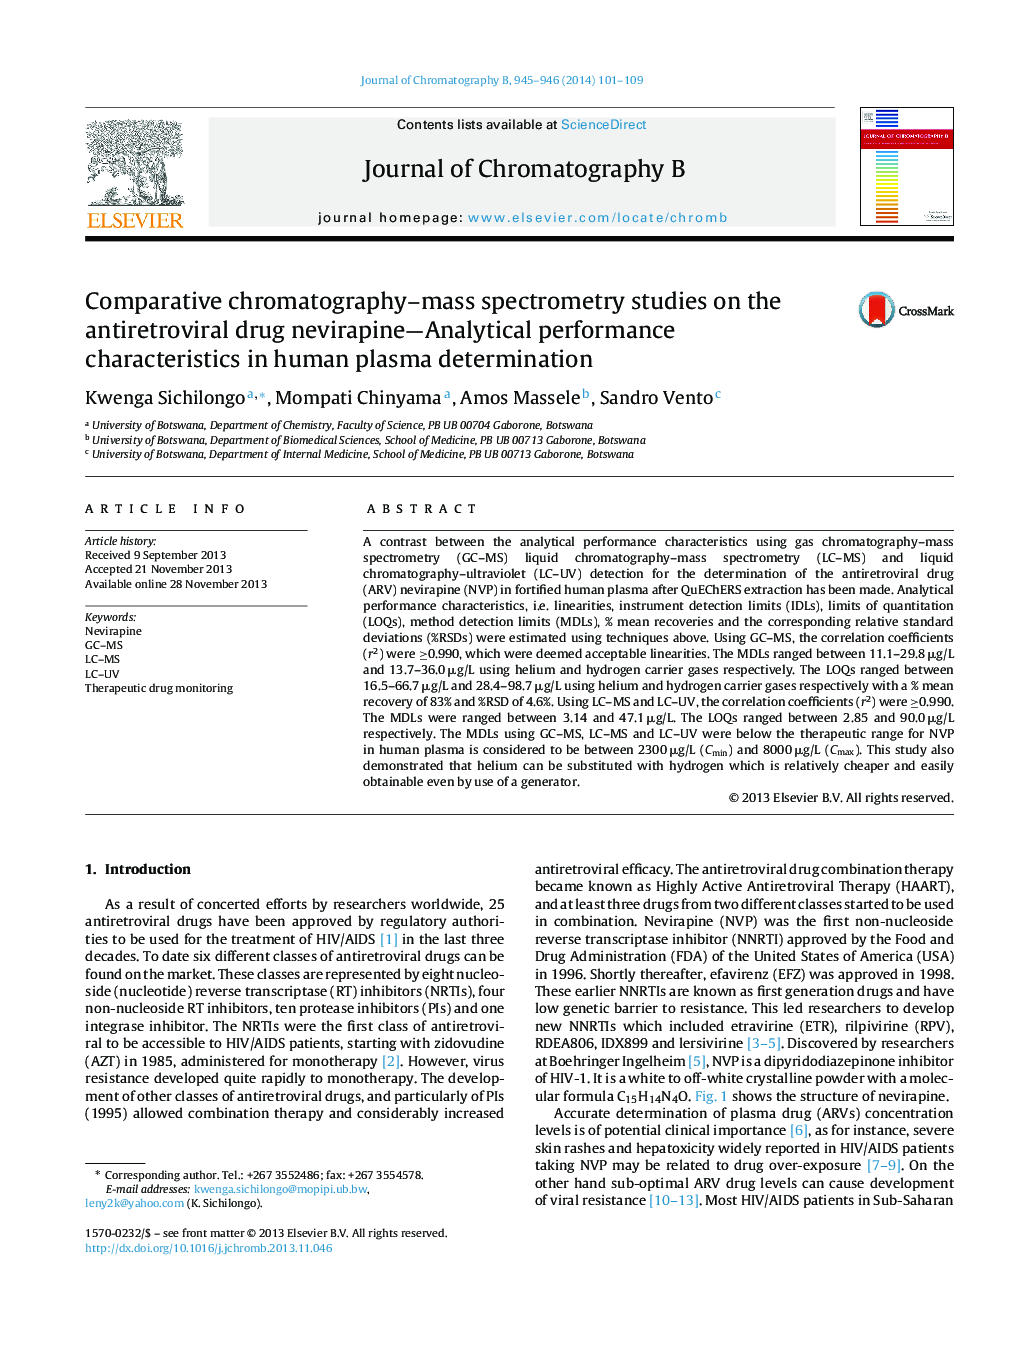 Comparative chromatography–mass spectrometry studies on the antiretroviral drug nevirapine—Analytical performance characteristics in human plasma determination